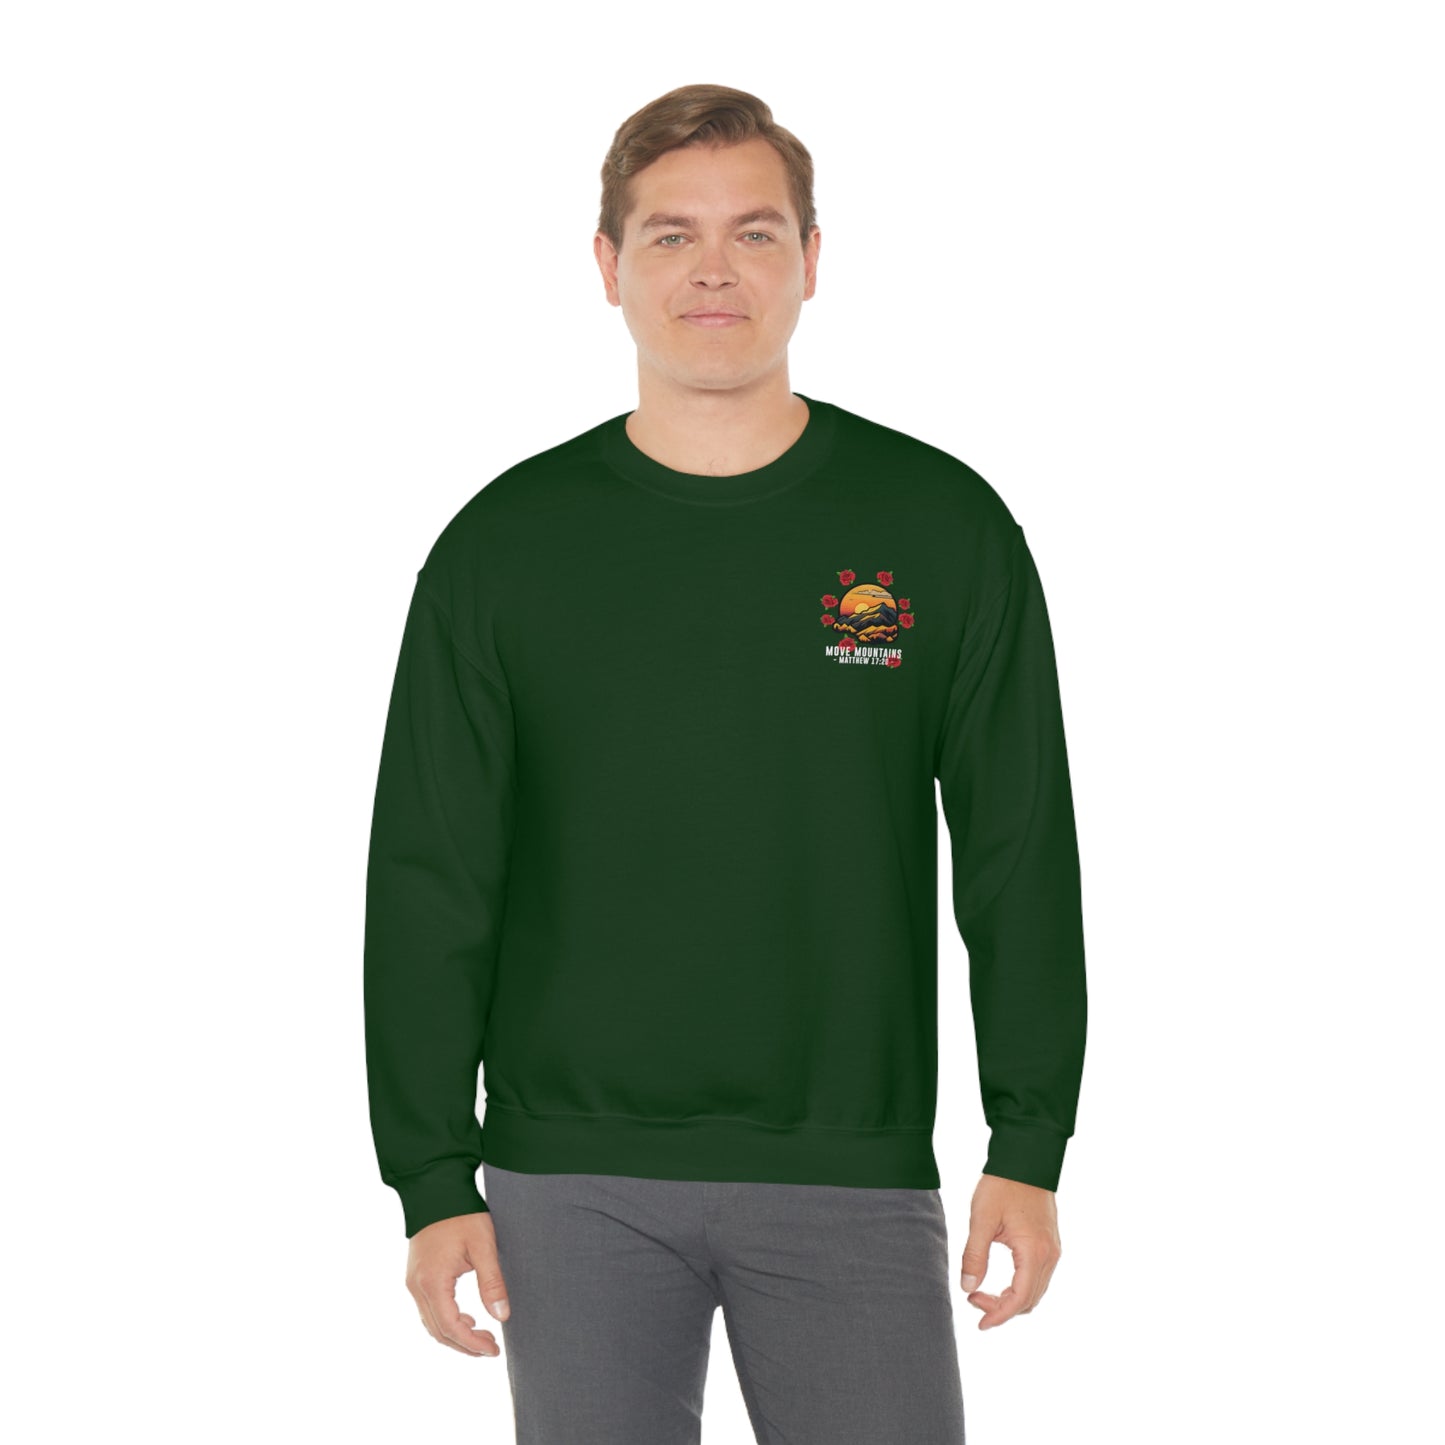 Mustard Seed Faith™ Crewneck Sweatshirt